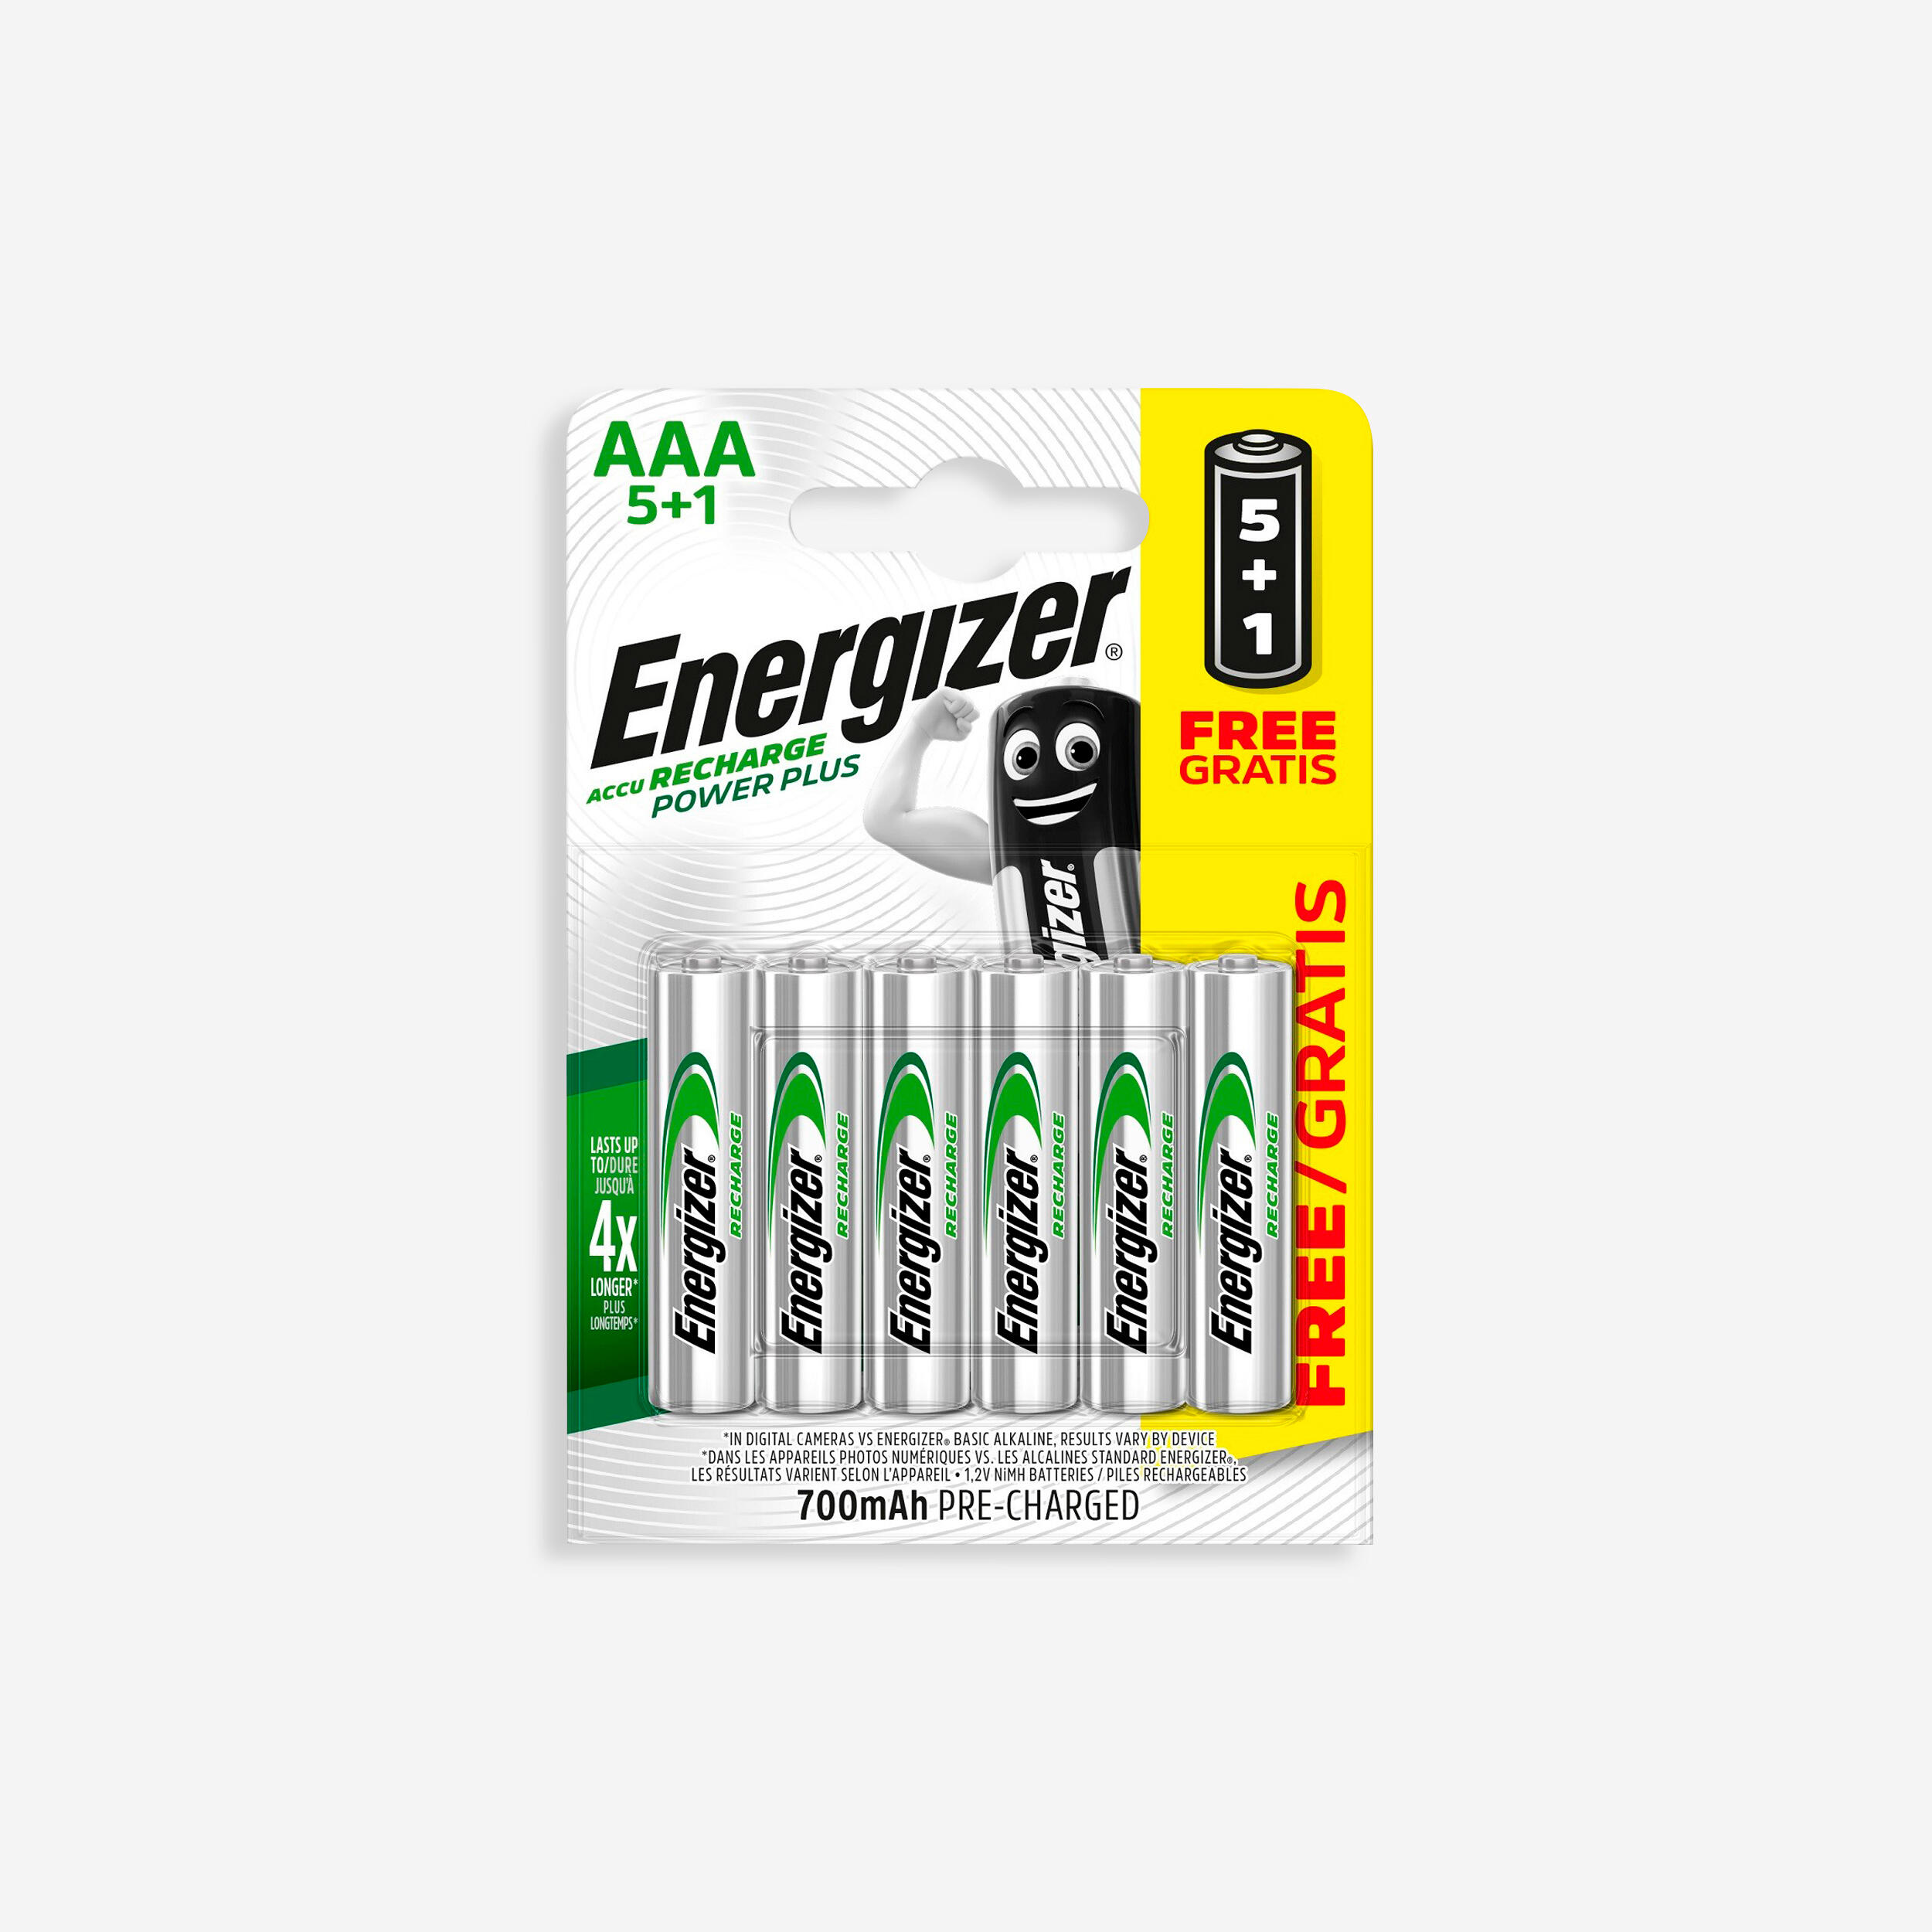 Baterii reîncărcabile Nimh Energizer 5+1 AAA HR3 700 mAh La Oferta Online decathlon imagine La Oferta Online